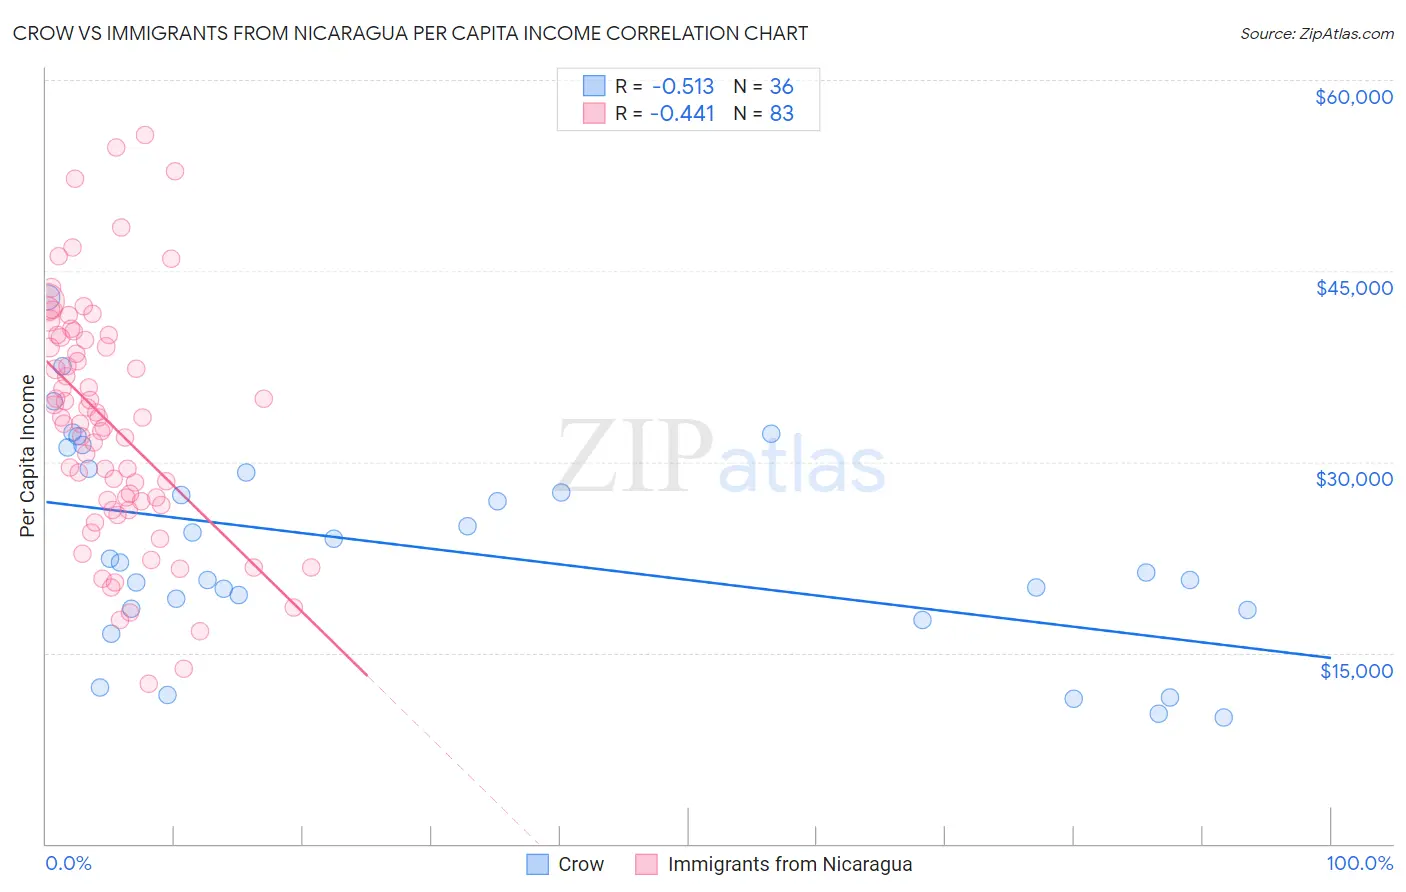 Crow vs Immigrants from Nicaragua Per Capita Income